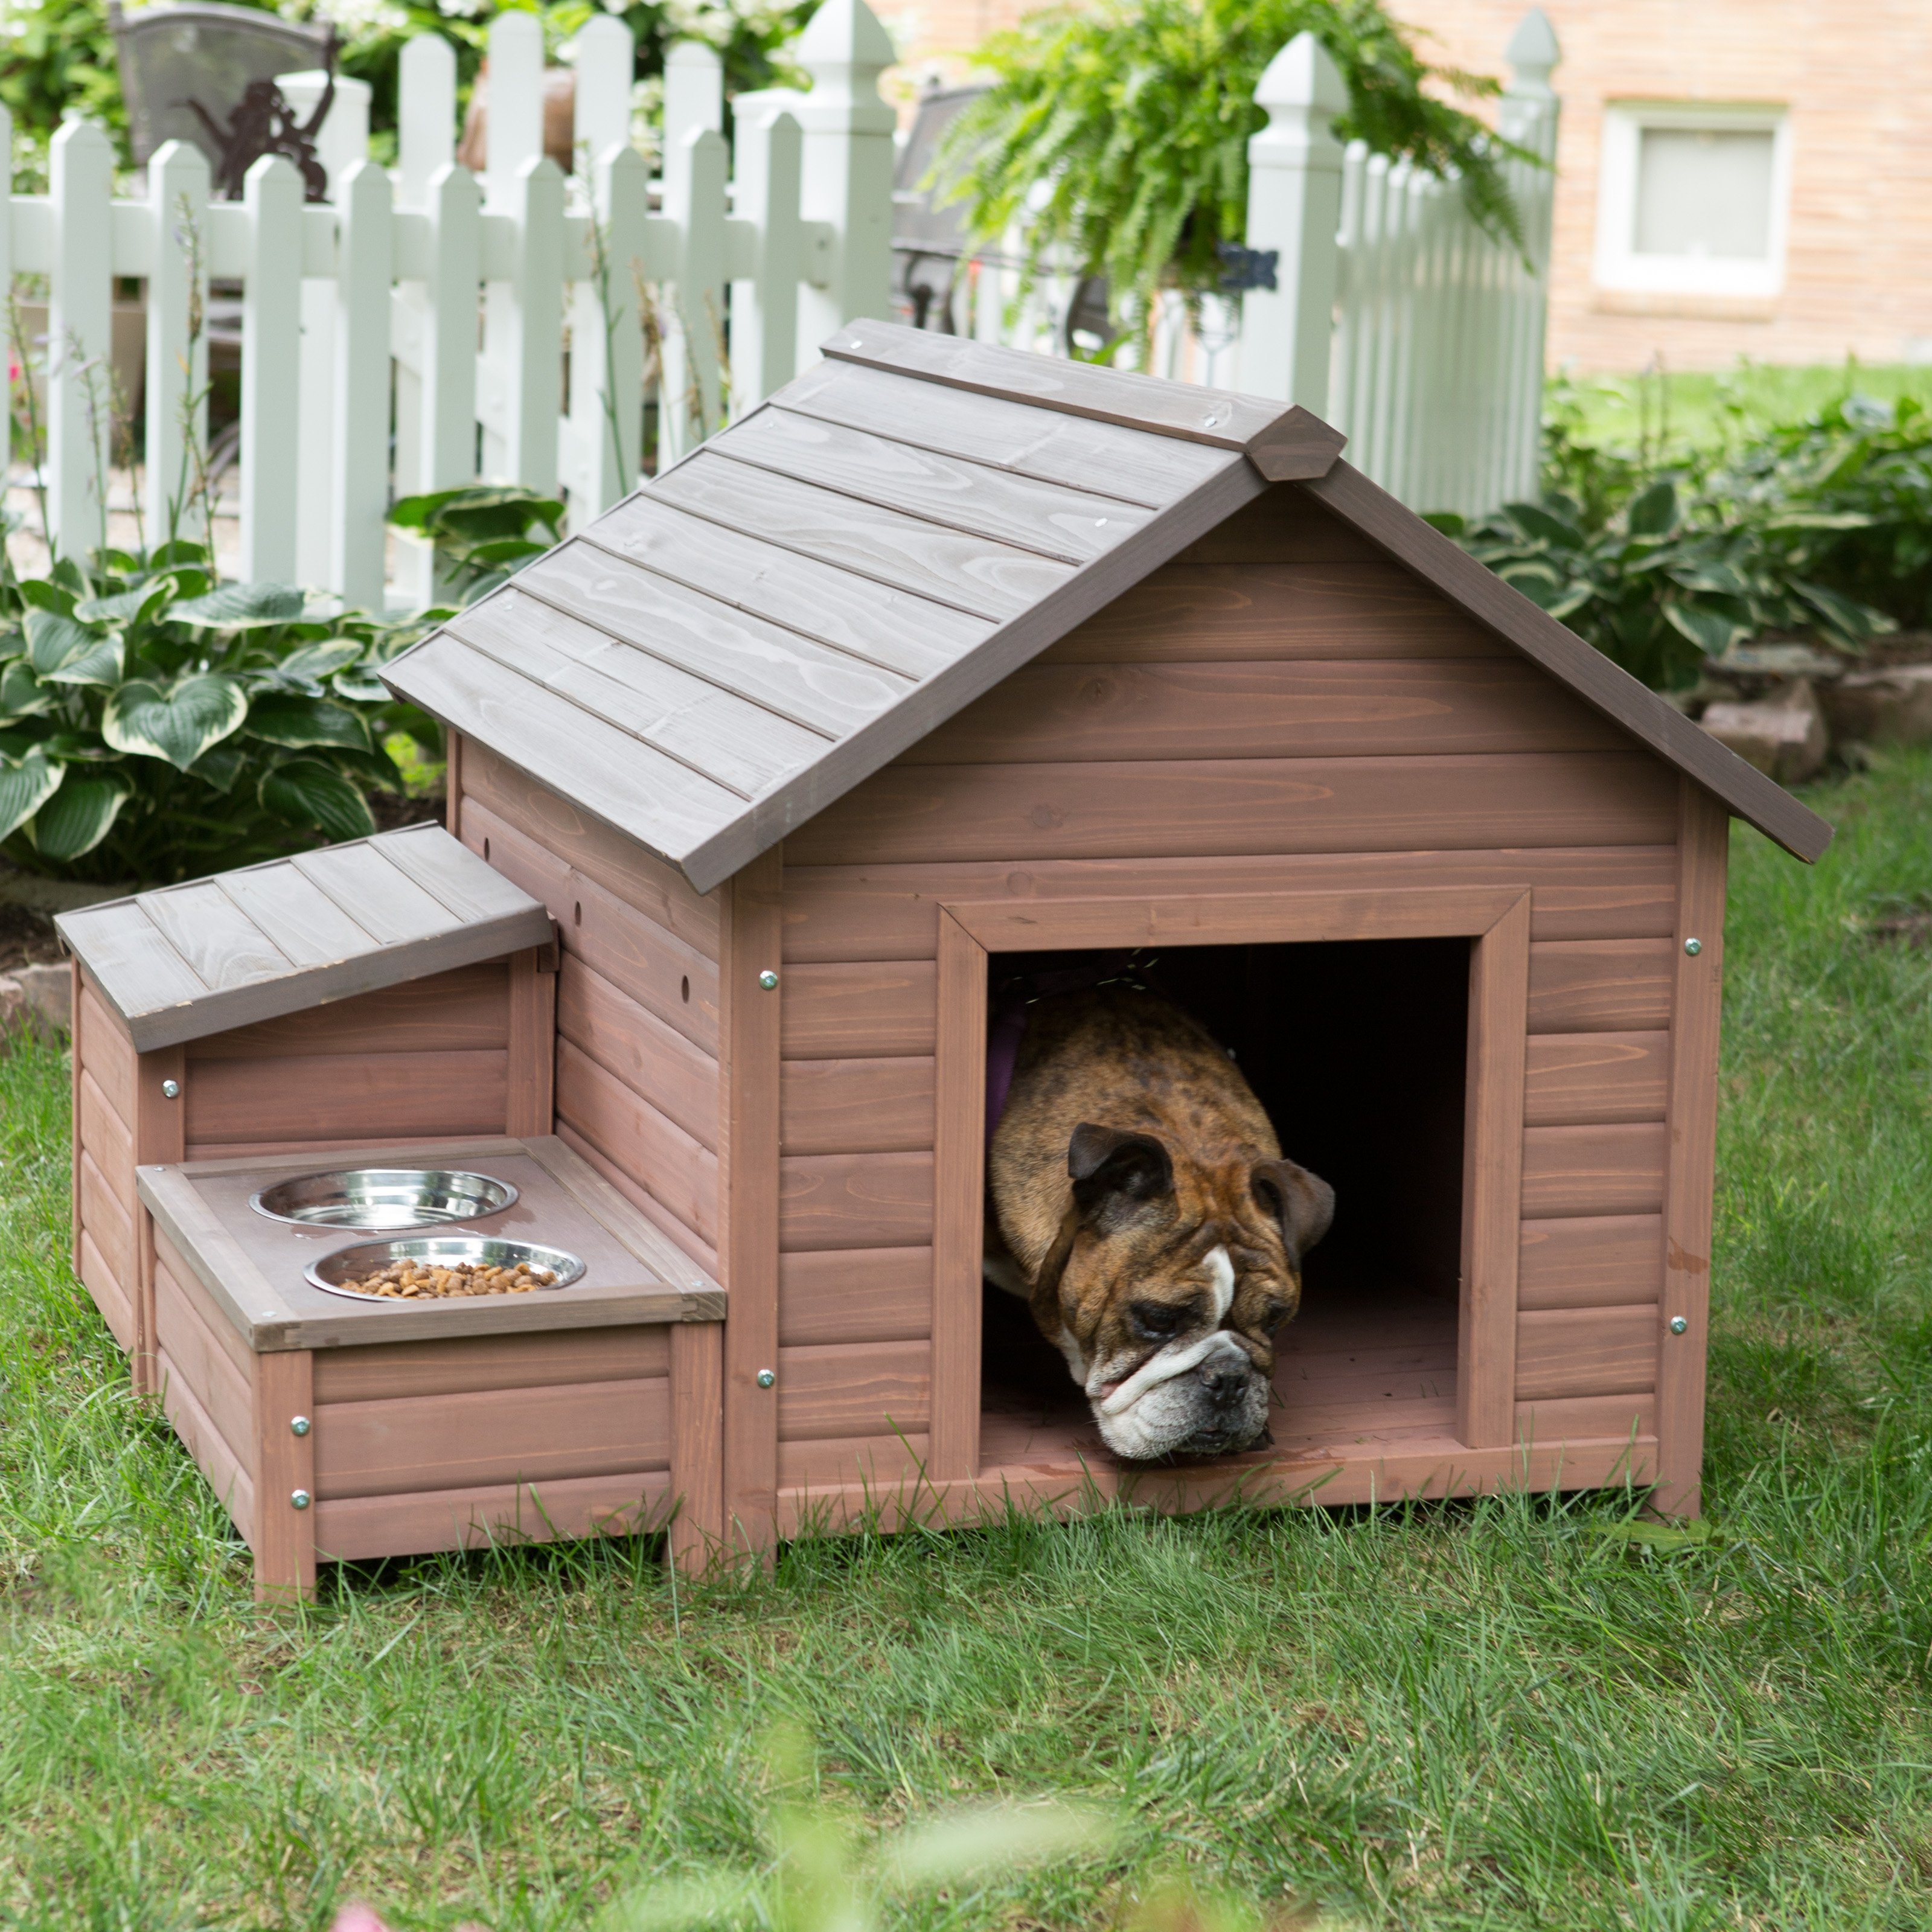 The dog house demo dog houses info. Собачья конура будка. Вольер будка усадьба. Красивая собачья конура. Конура домик для собаки.